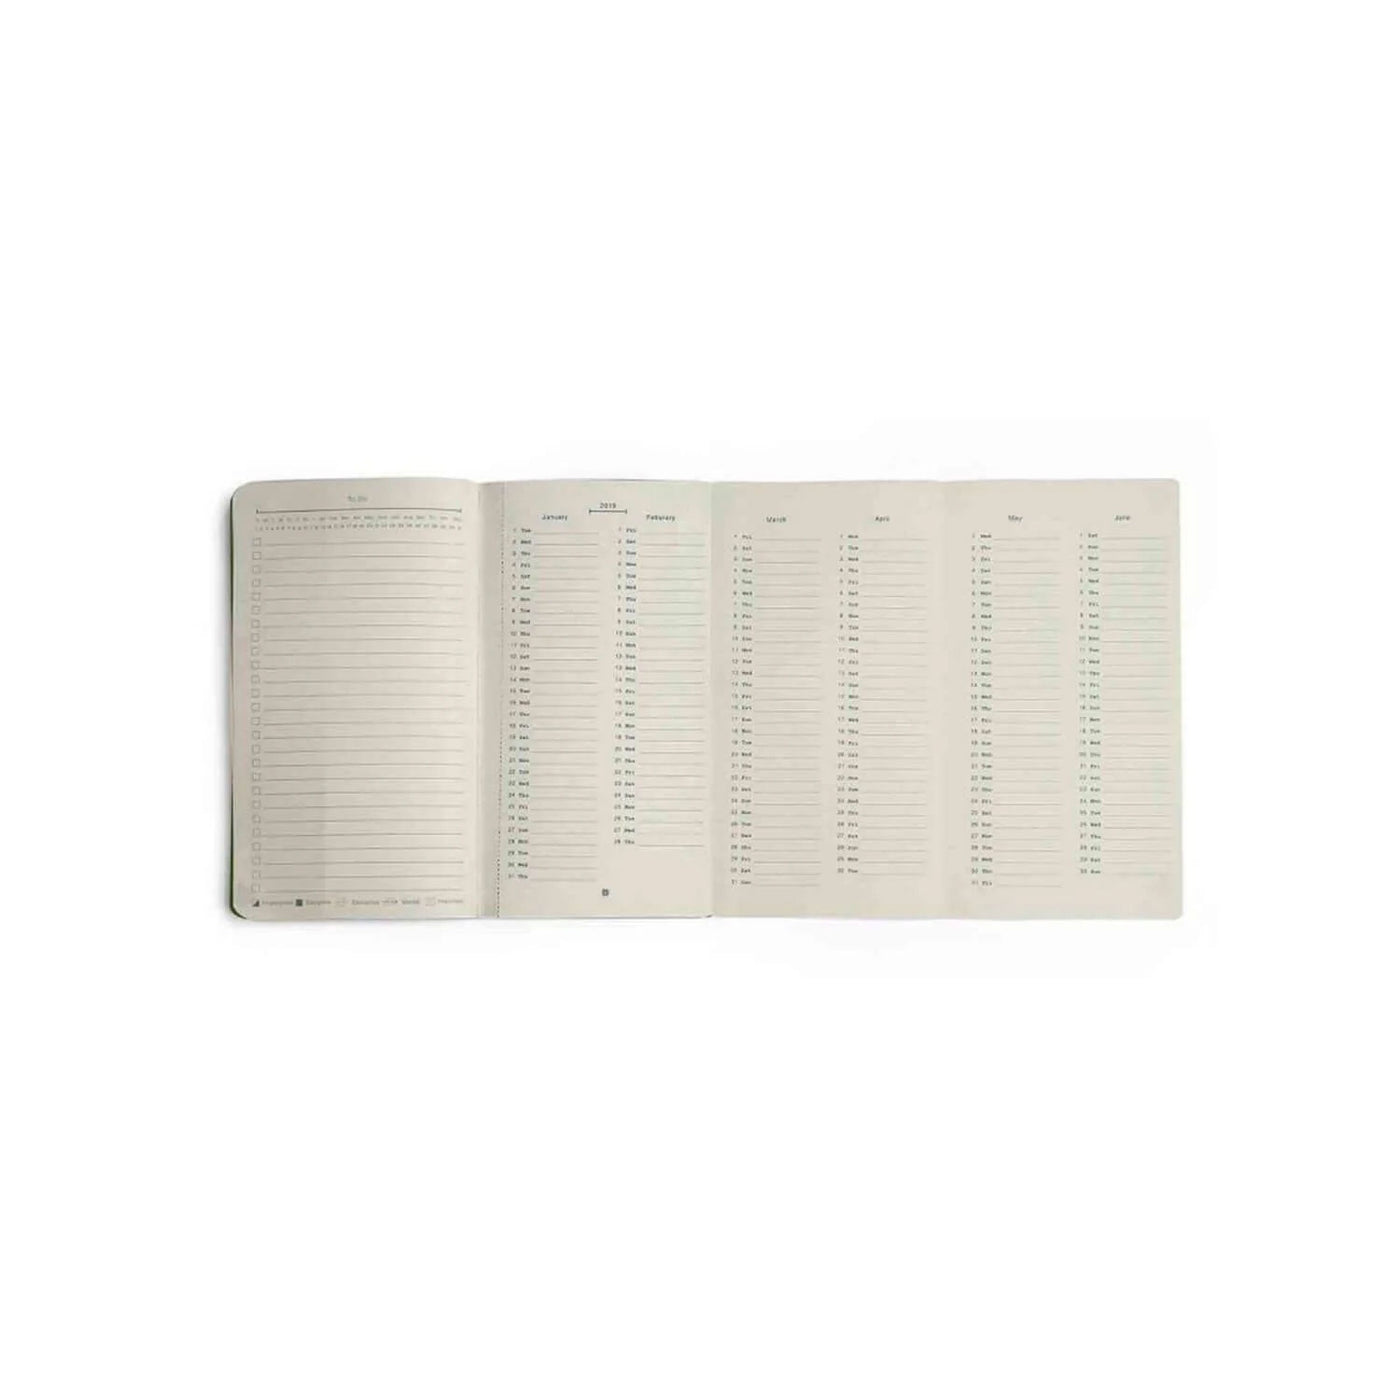 Pennline Quikfill Notebook Refill For Quikrite, Green - Set Of 2 4